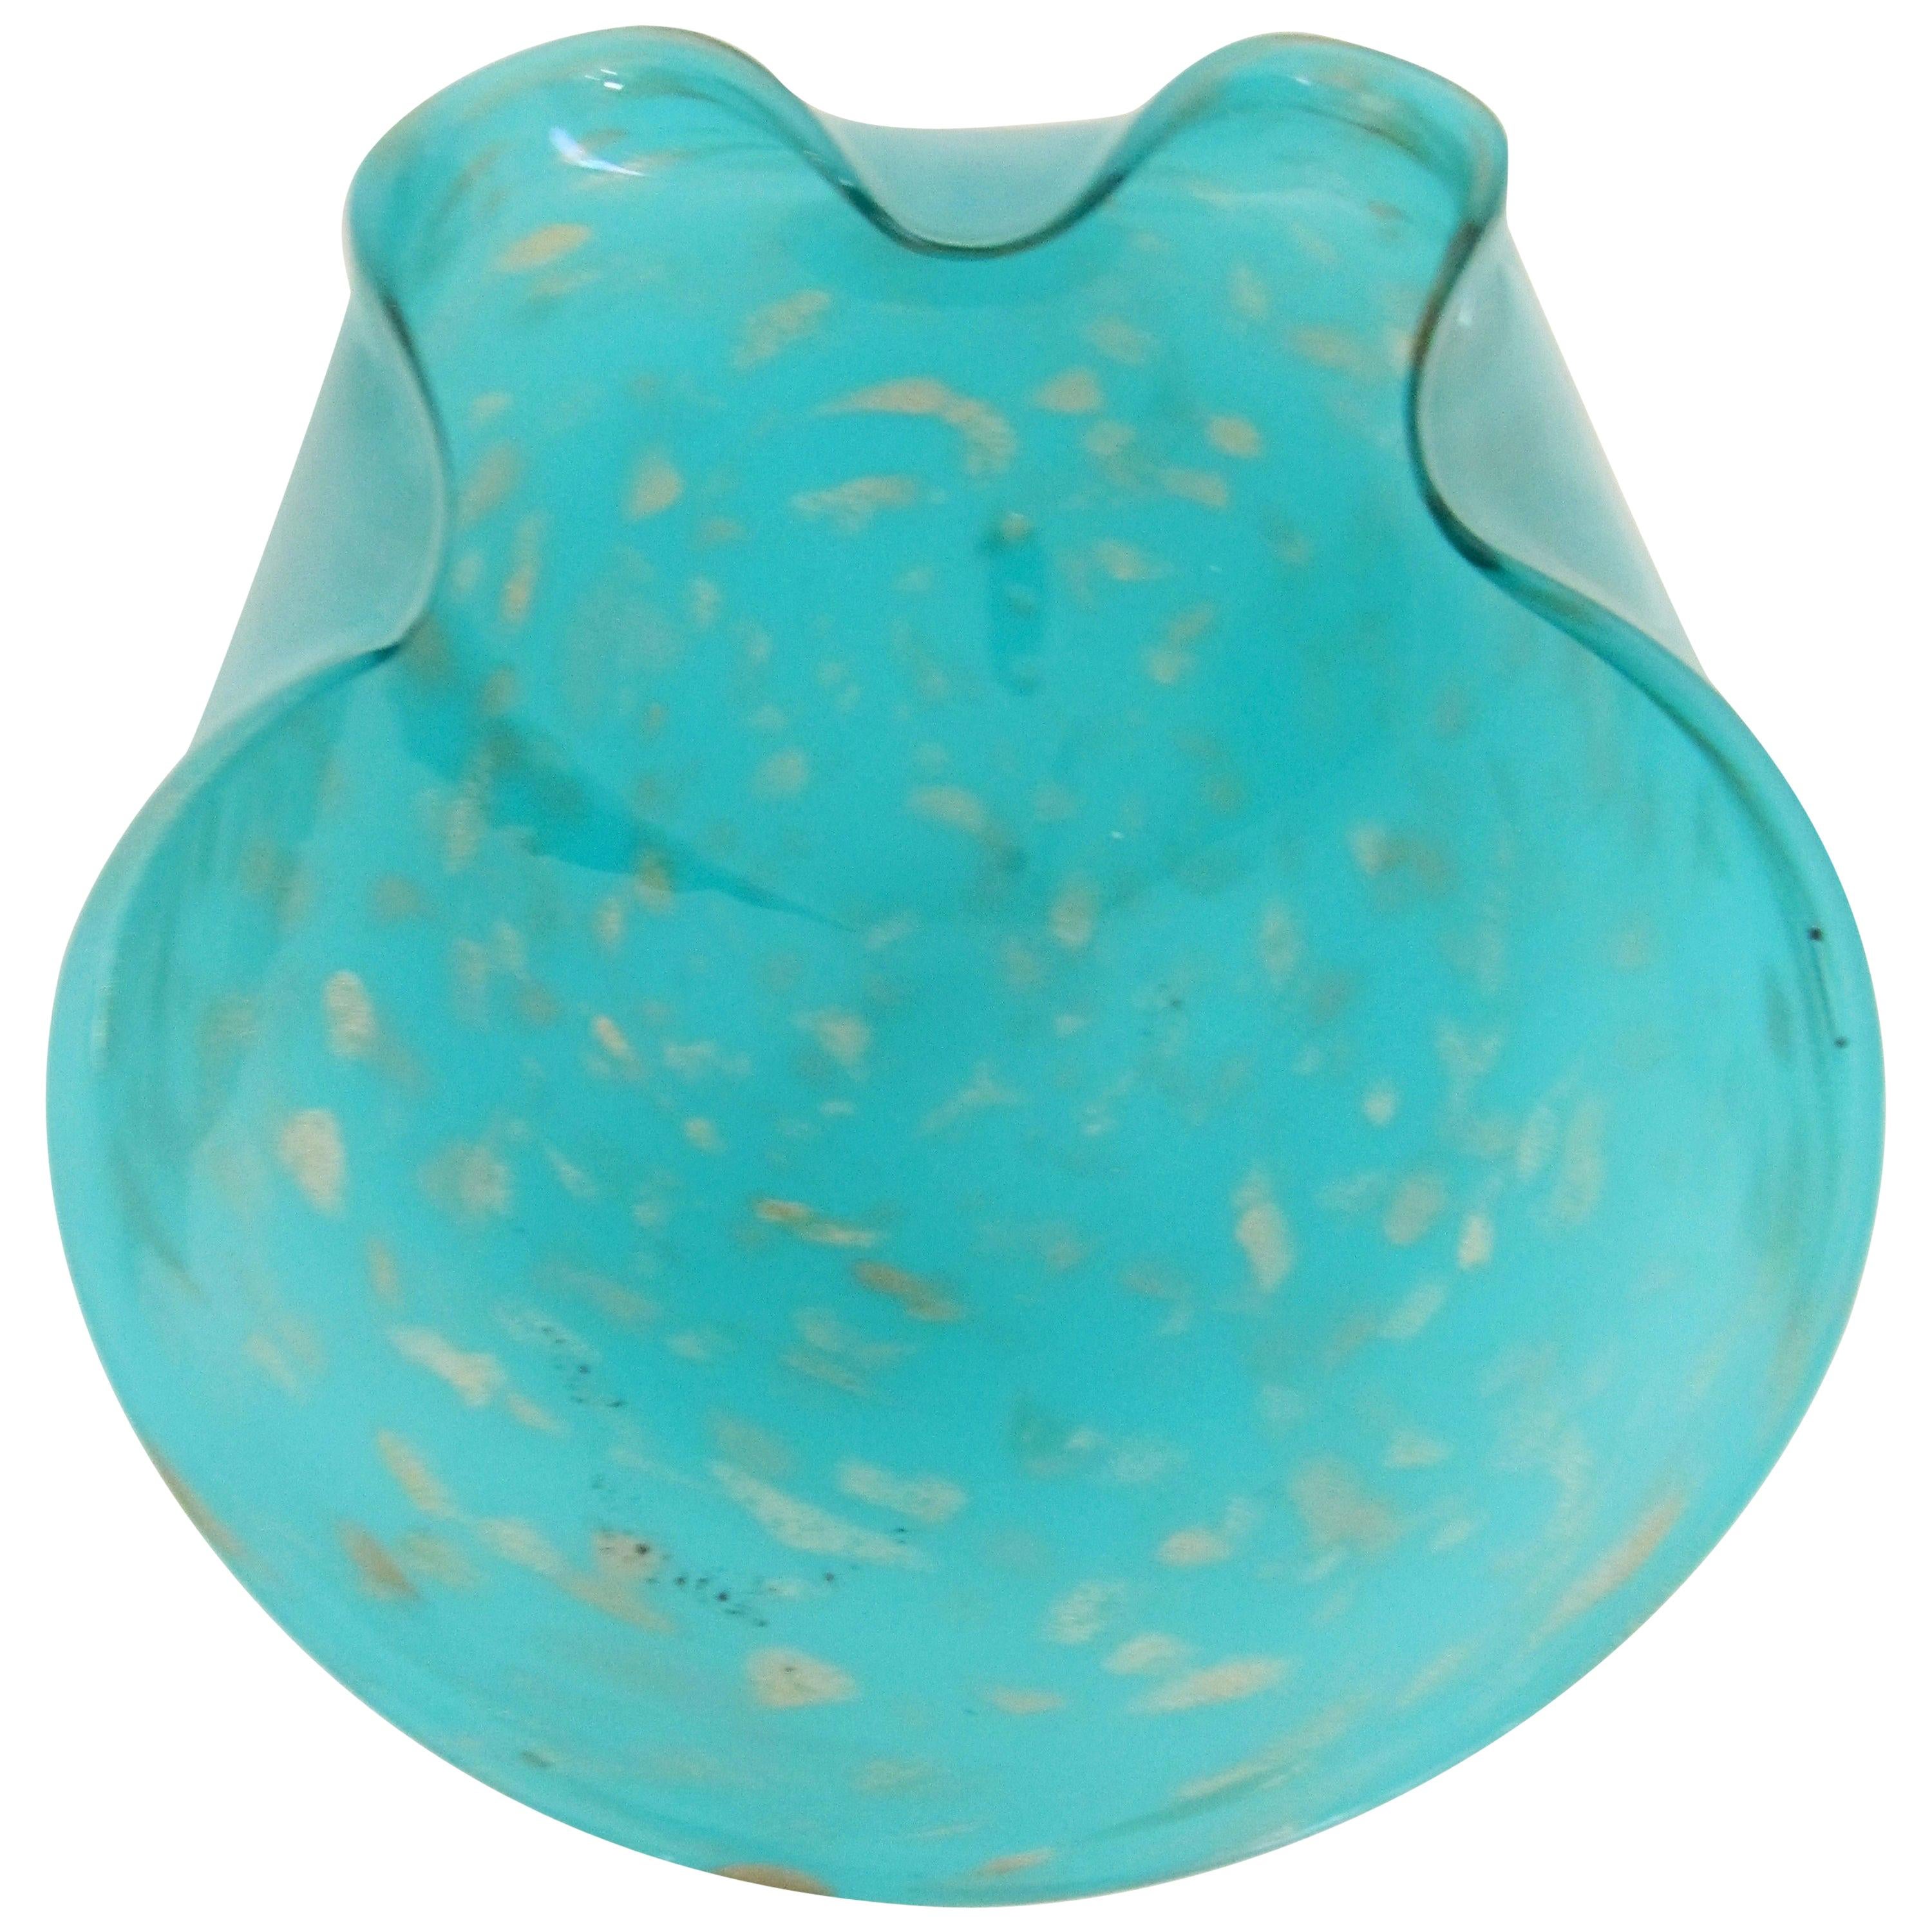 Italian Murano Art Glass Bowl in Turquoise Blue